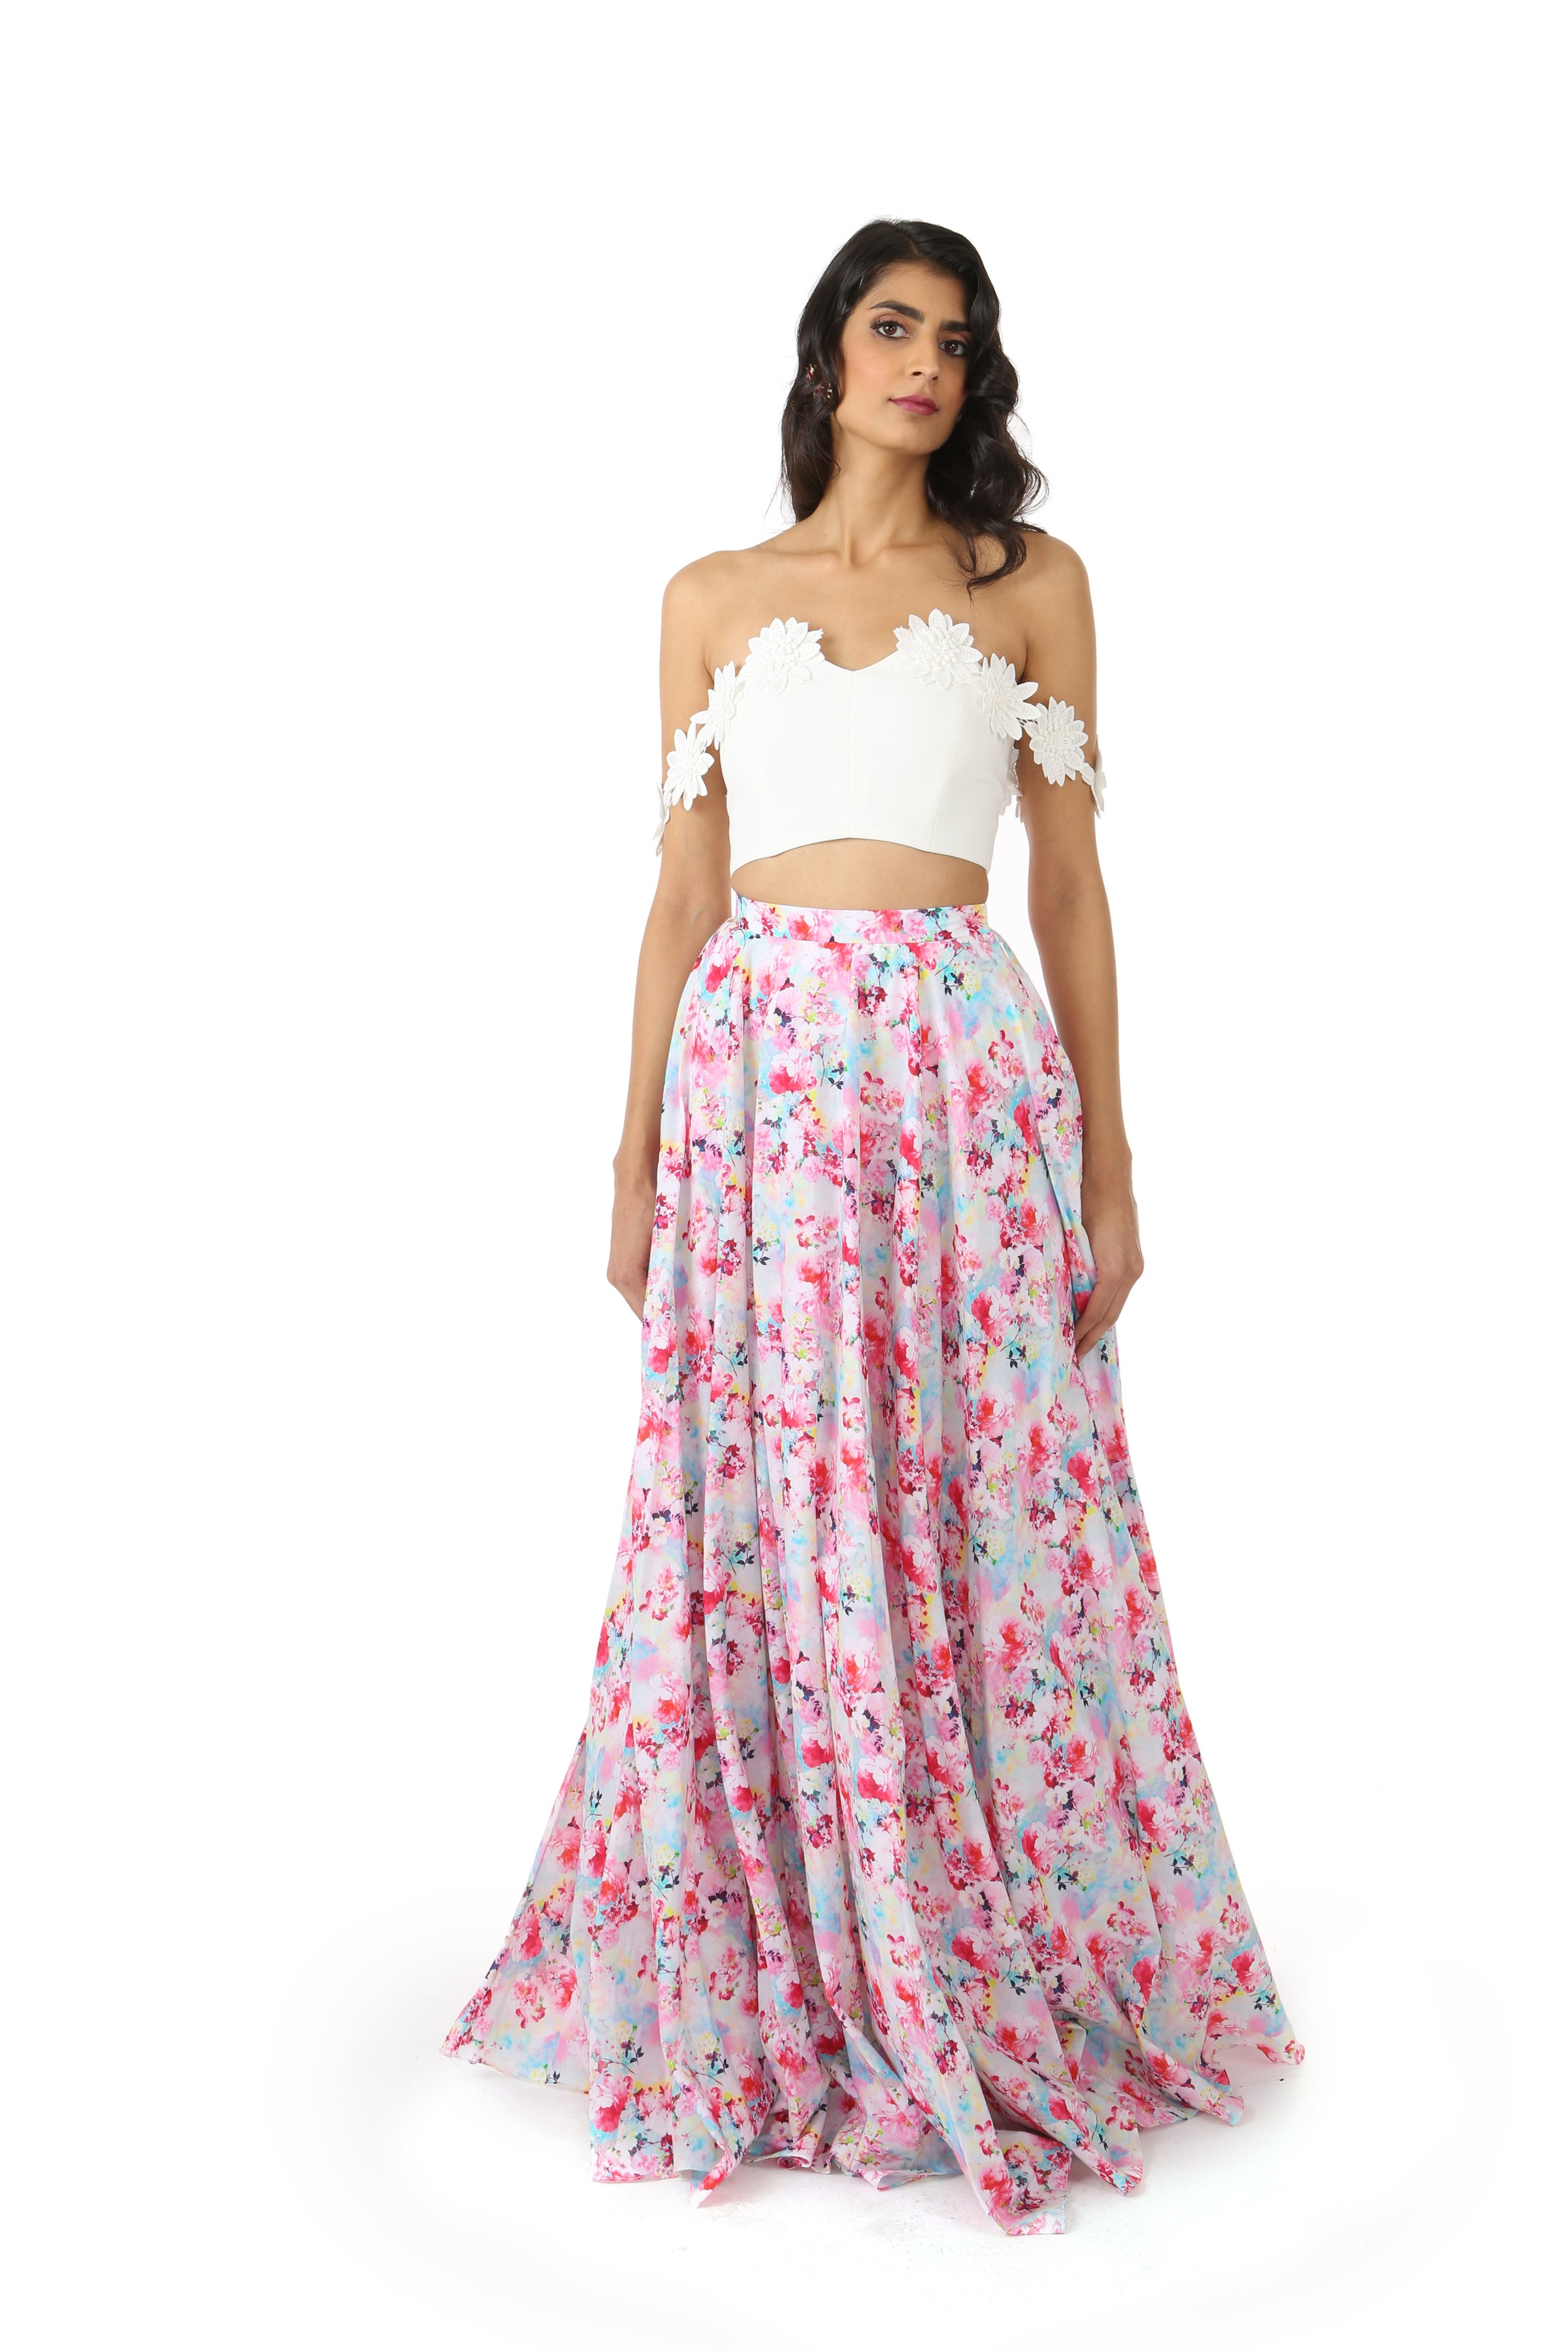 White and Pink Lehenga Skirt - White Floral Multi Front View | HARLEEN KAUR